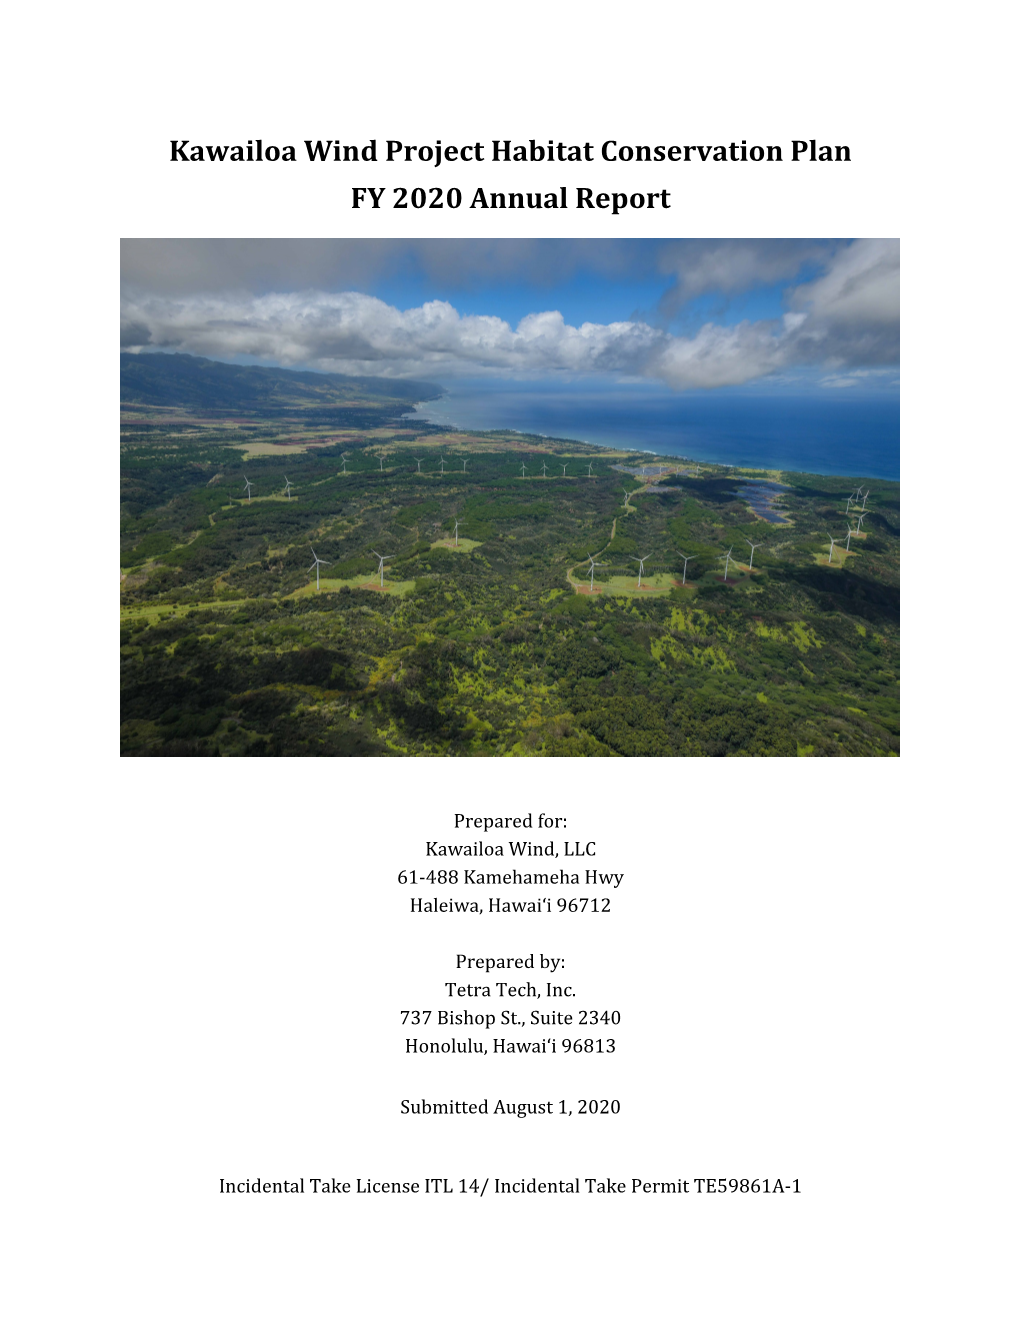 Kawailoa Wind Project Habitat Conservation Plan FY 2020 Annual Report